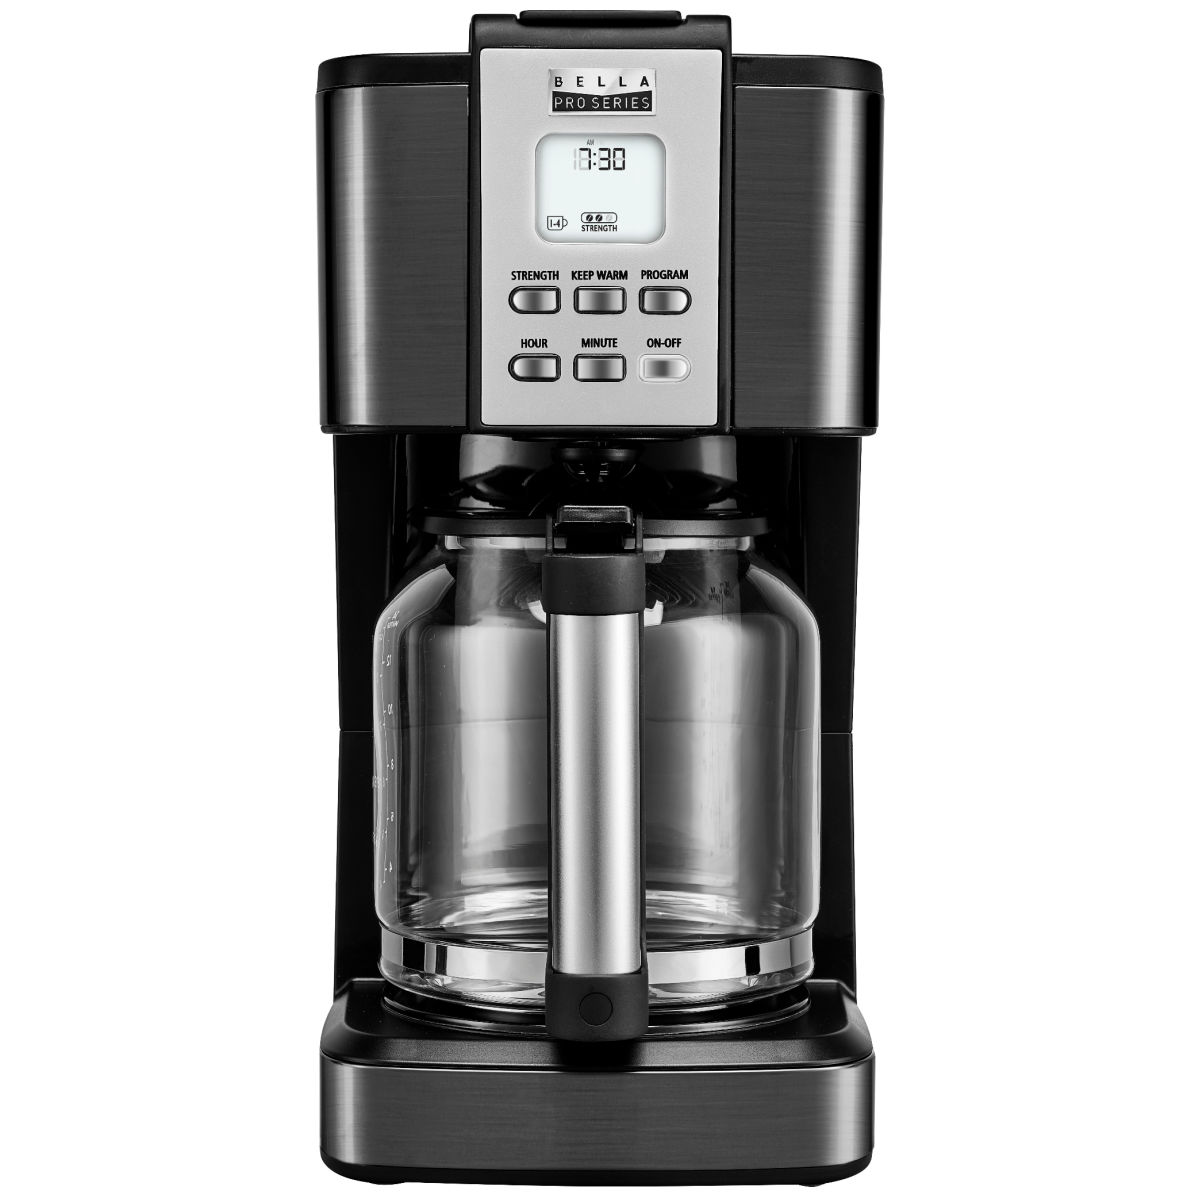 Bella 90061 Pro Series 14-Cup Coffee Maker